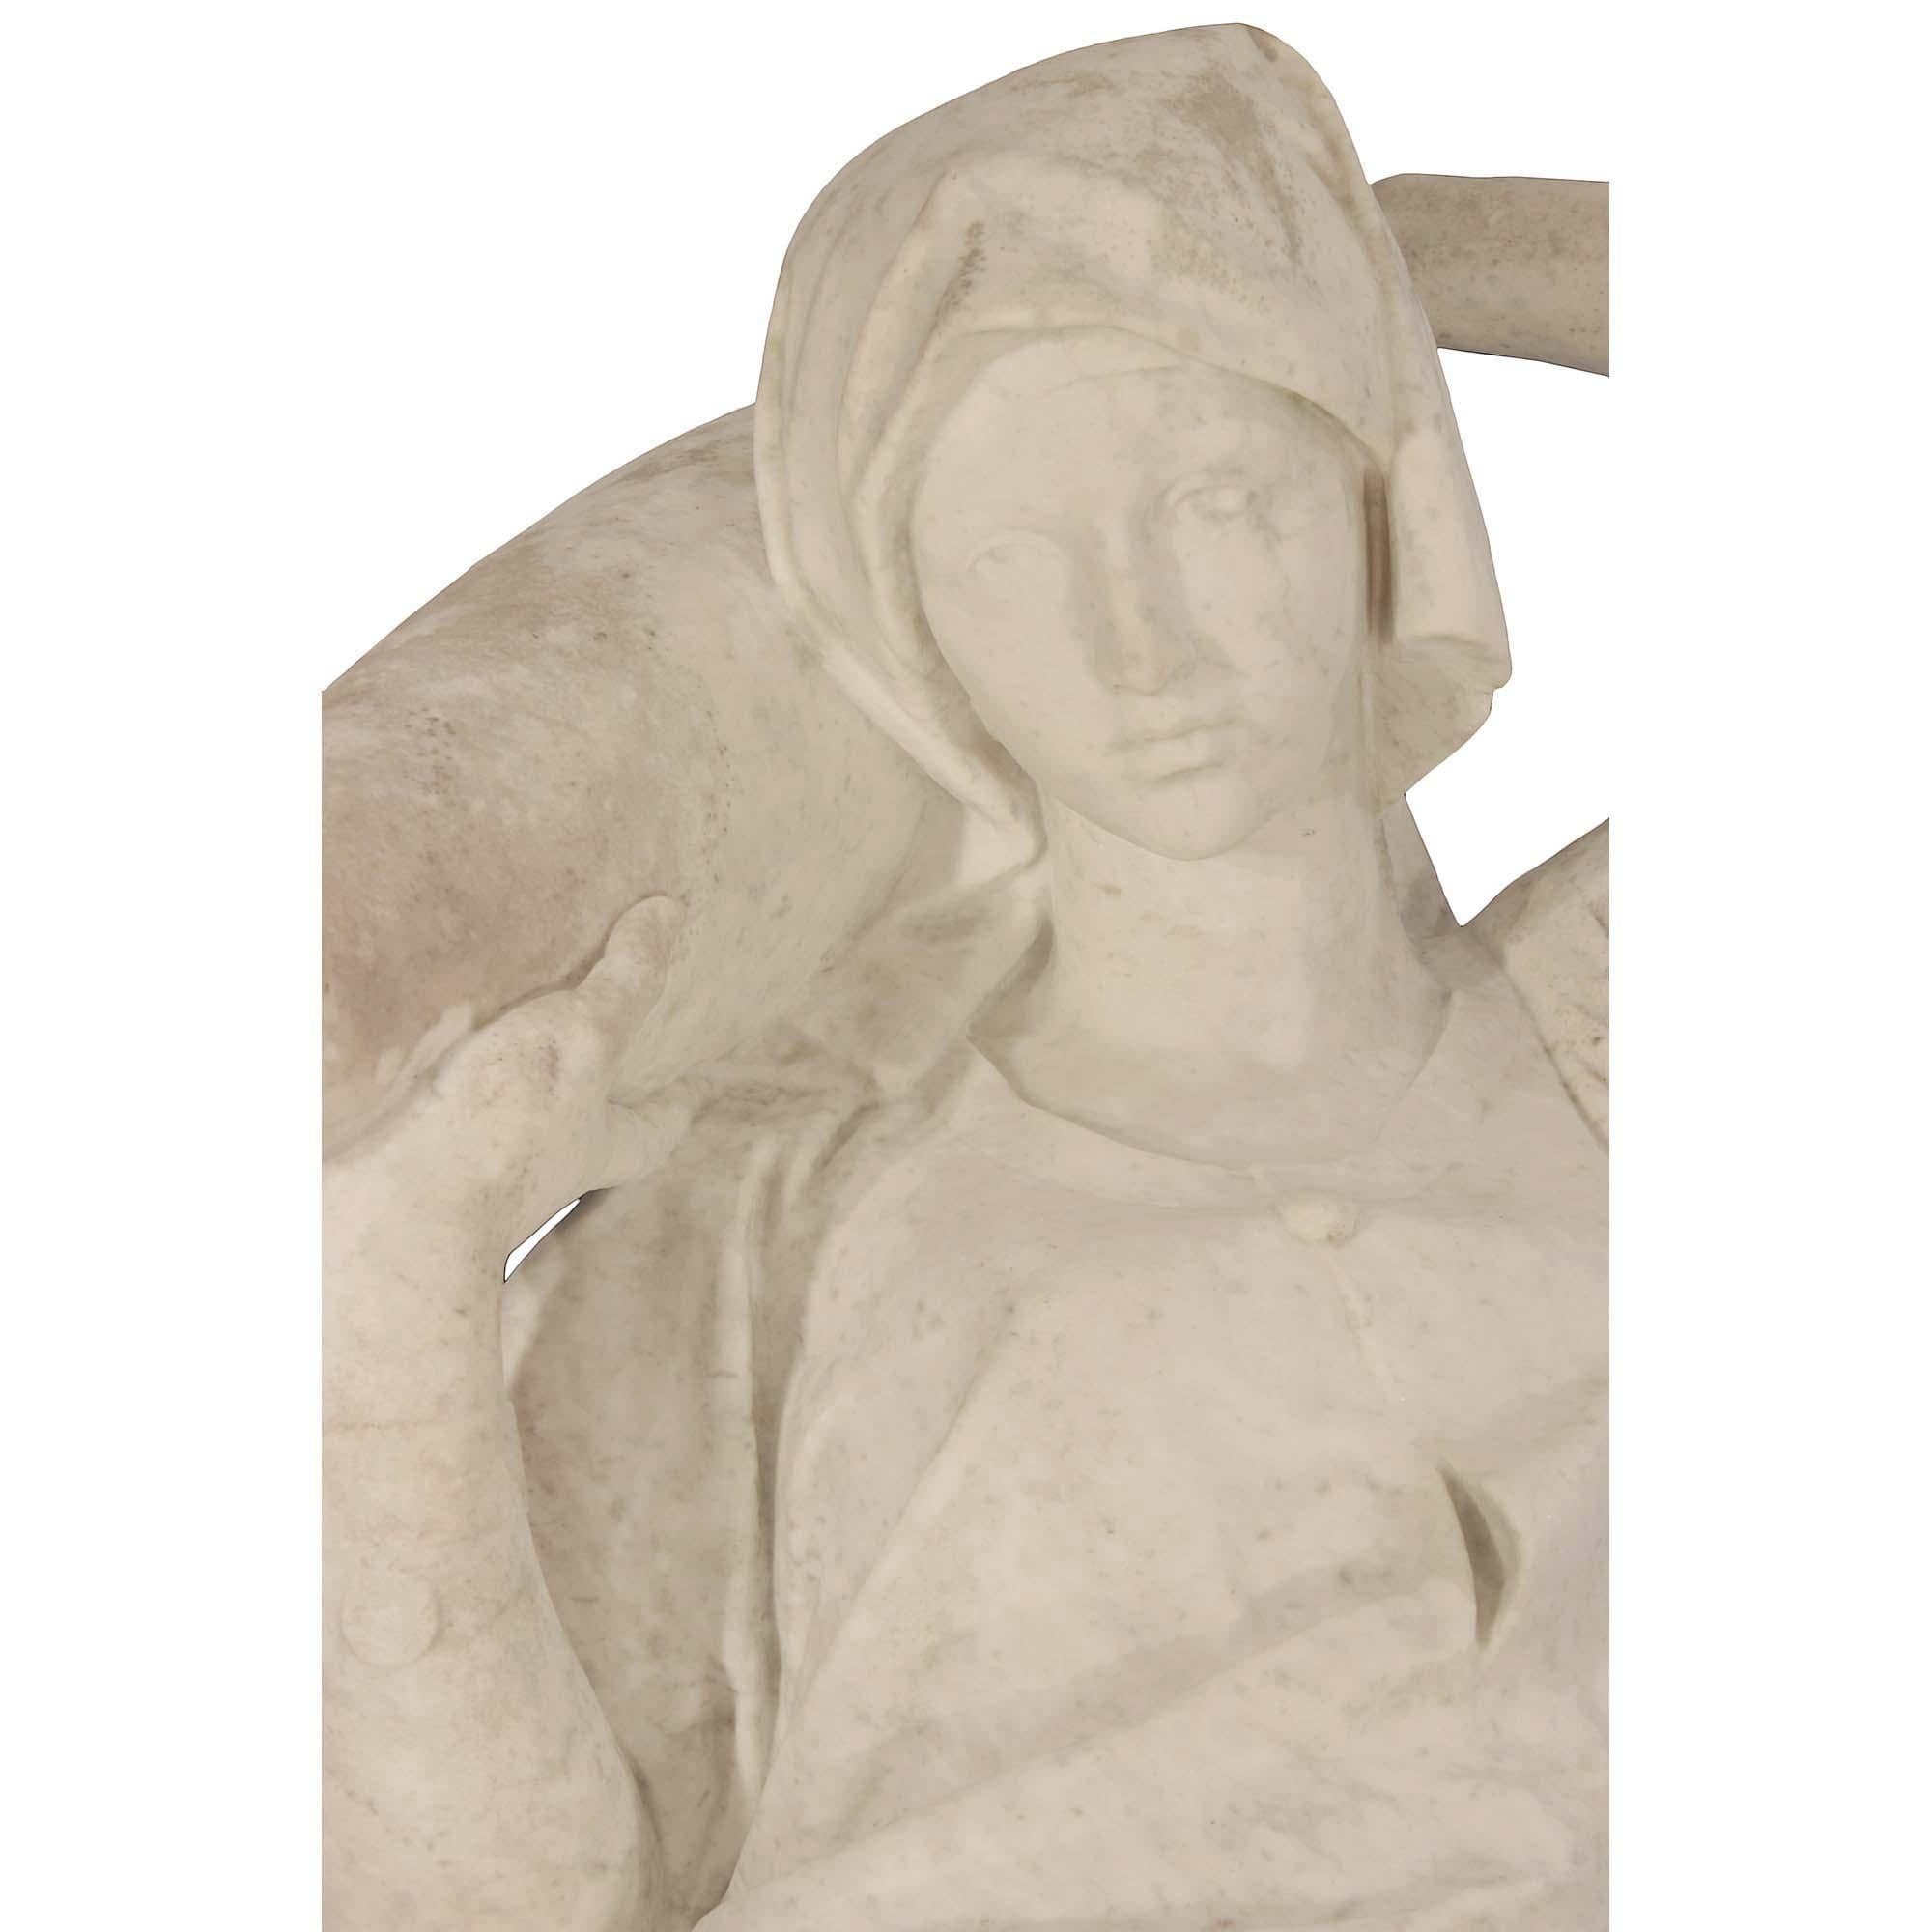 Italian 19th Century White Carrrara Marble Statue, Signed Lazzarini For Sale 2